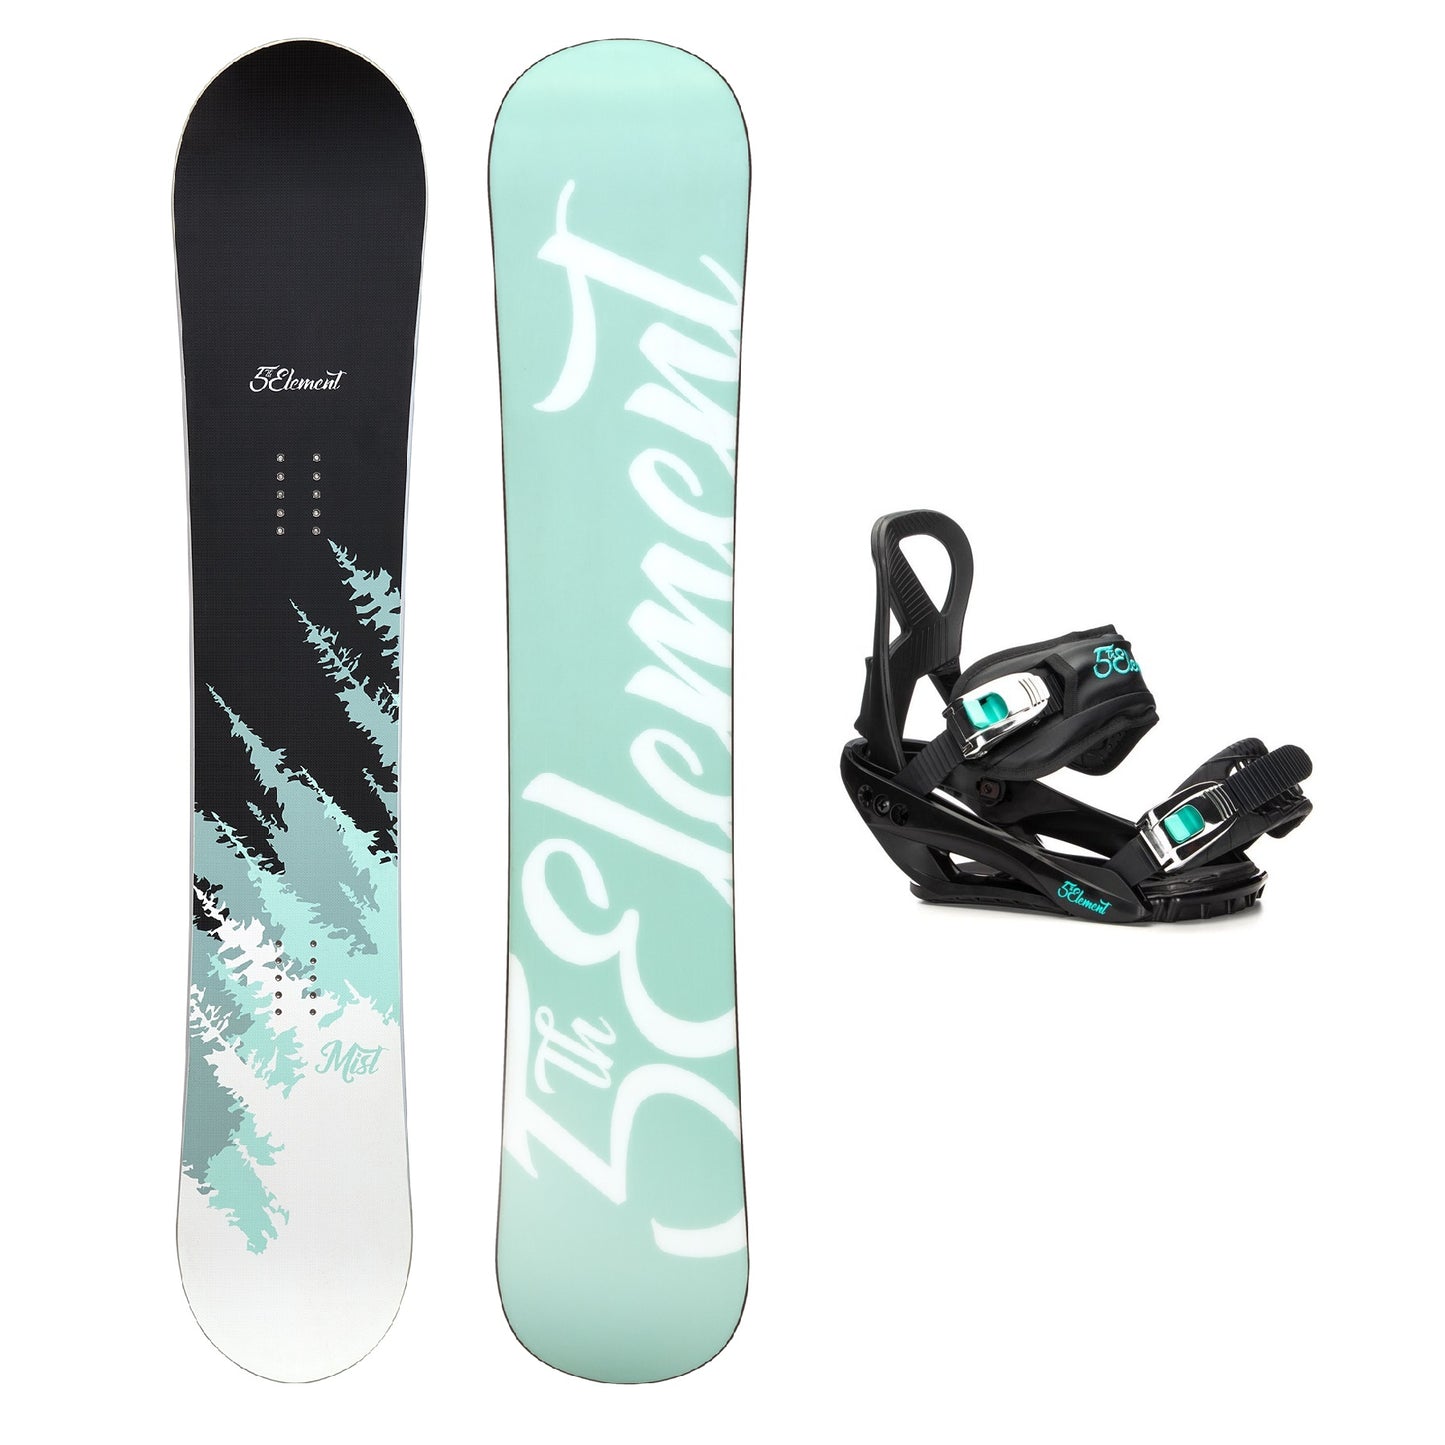 5th Element Mist Snowboard Package - Black/Teal